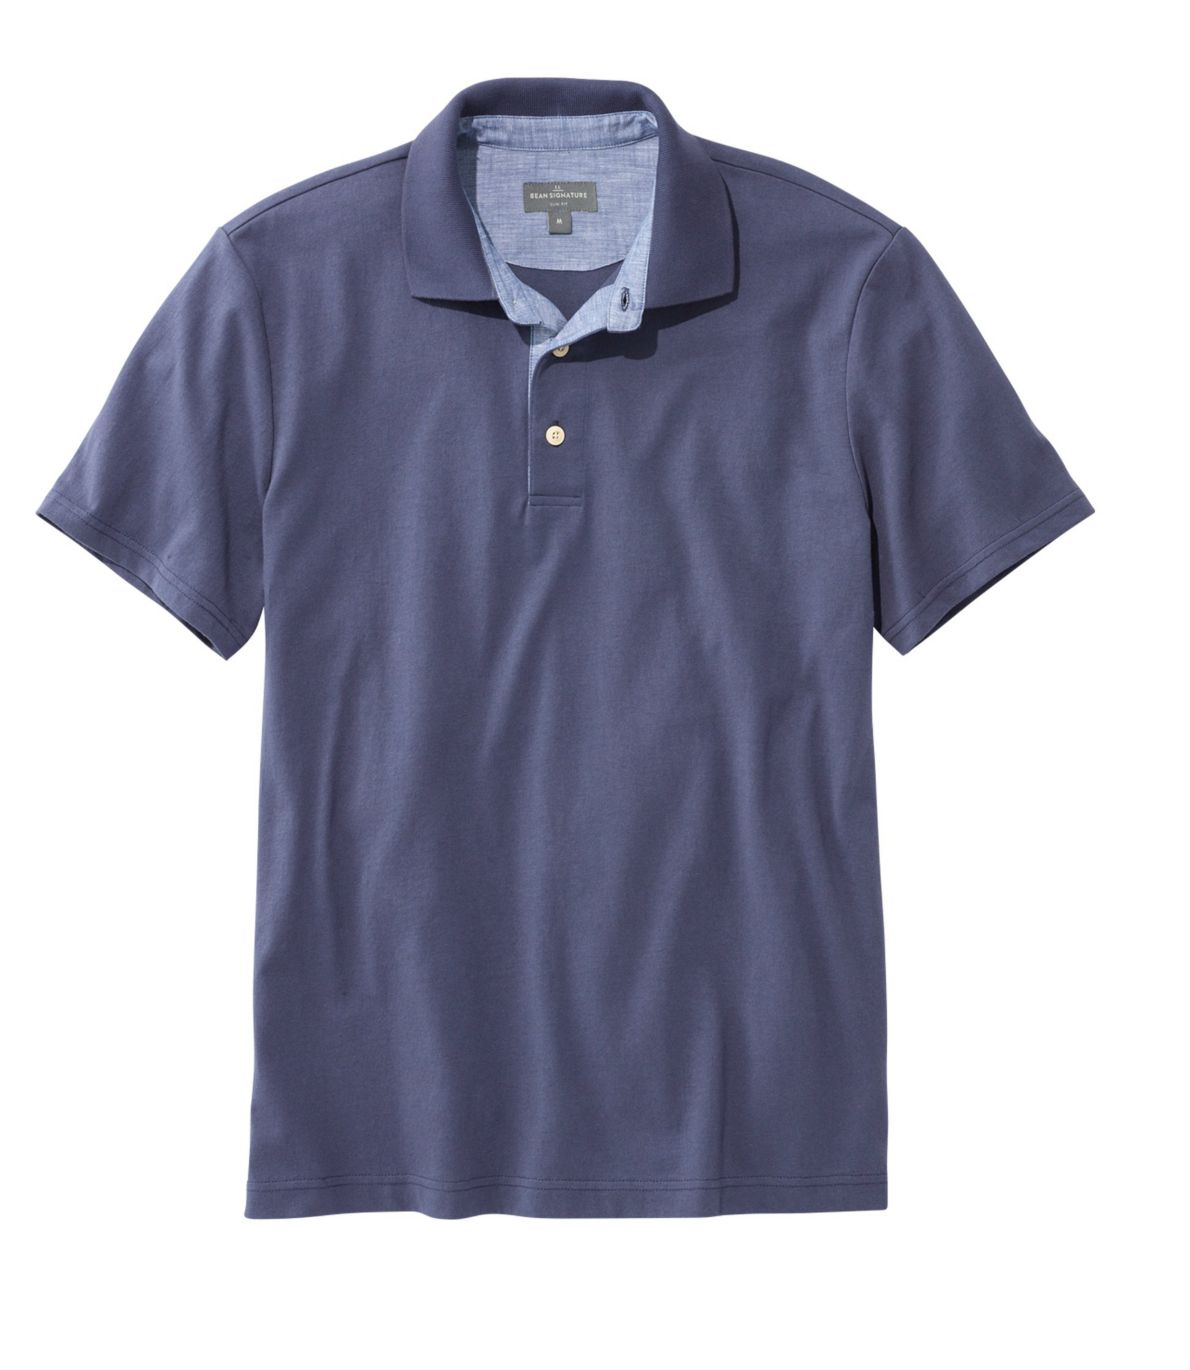 Men's Signature Polo Shirt, Short-Sleeve